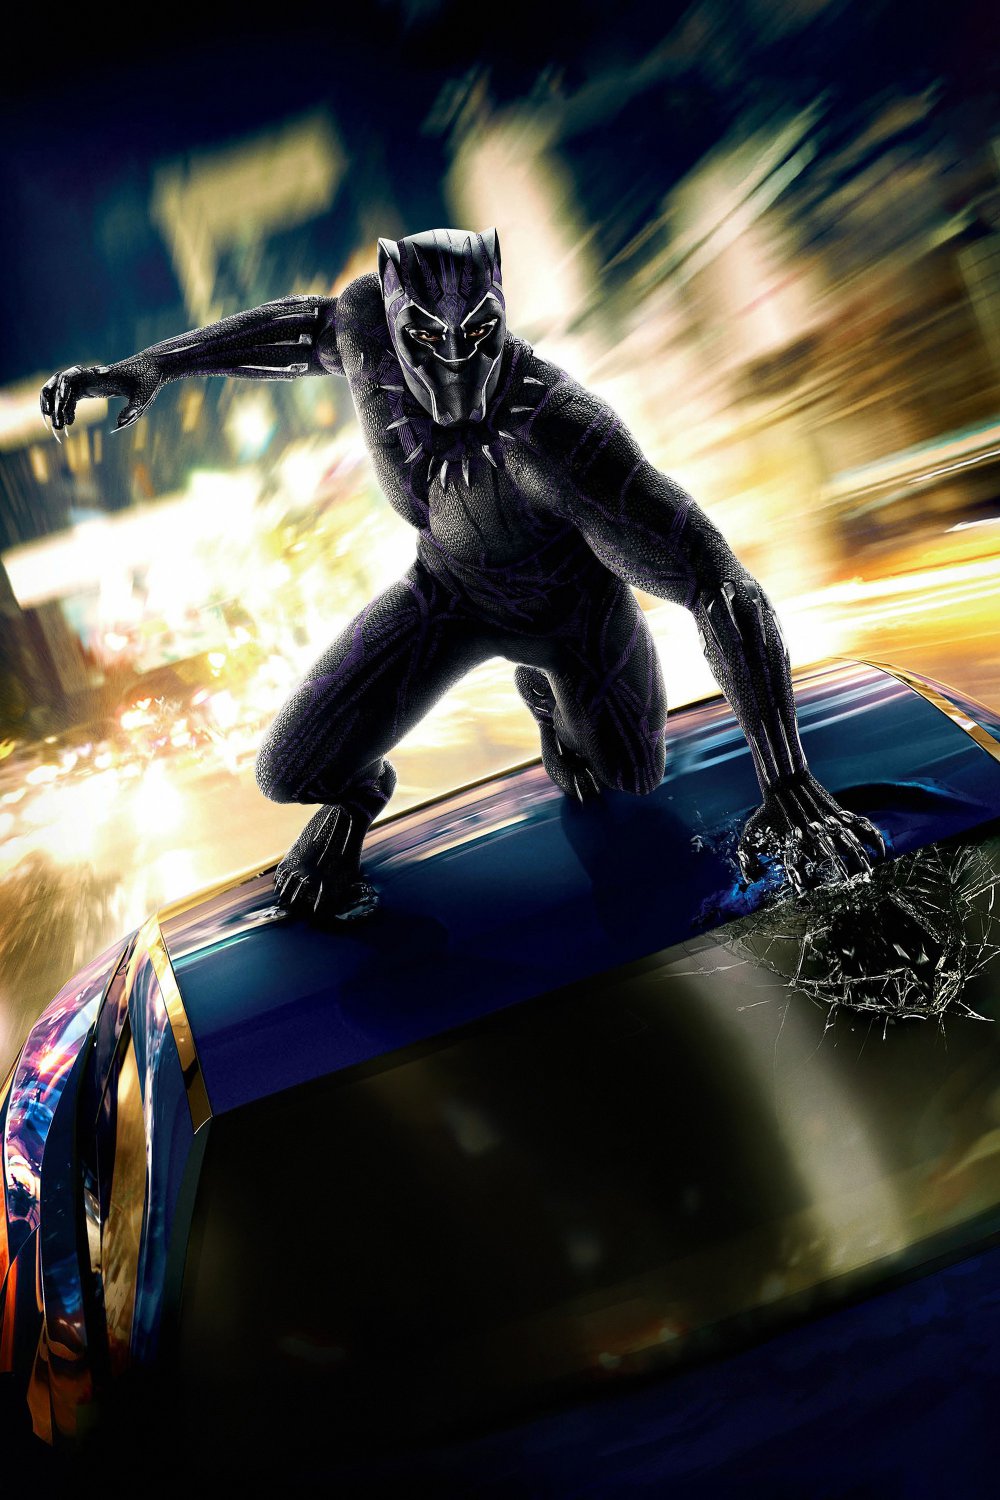 Black Panther 2018 Movie   18"x28" (45cm/70cm) Poster